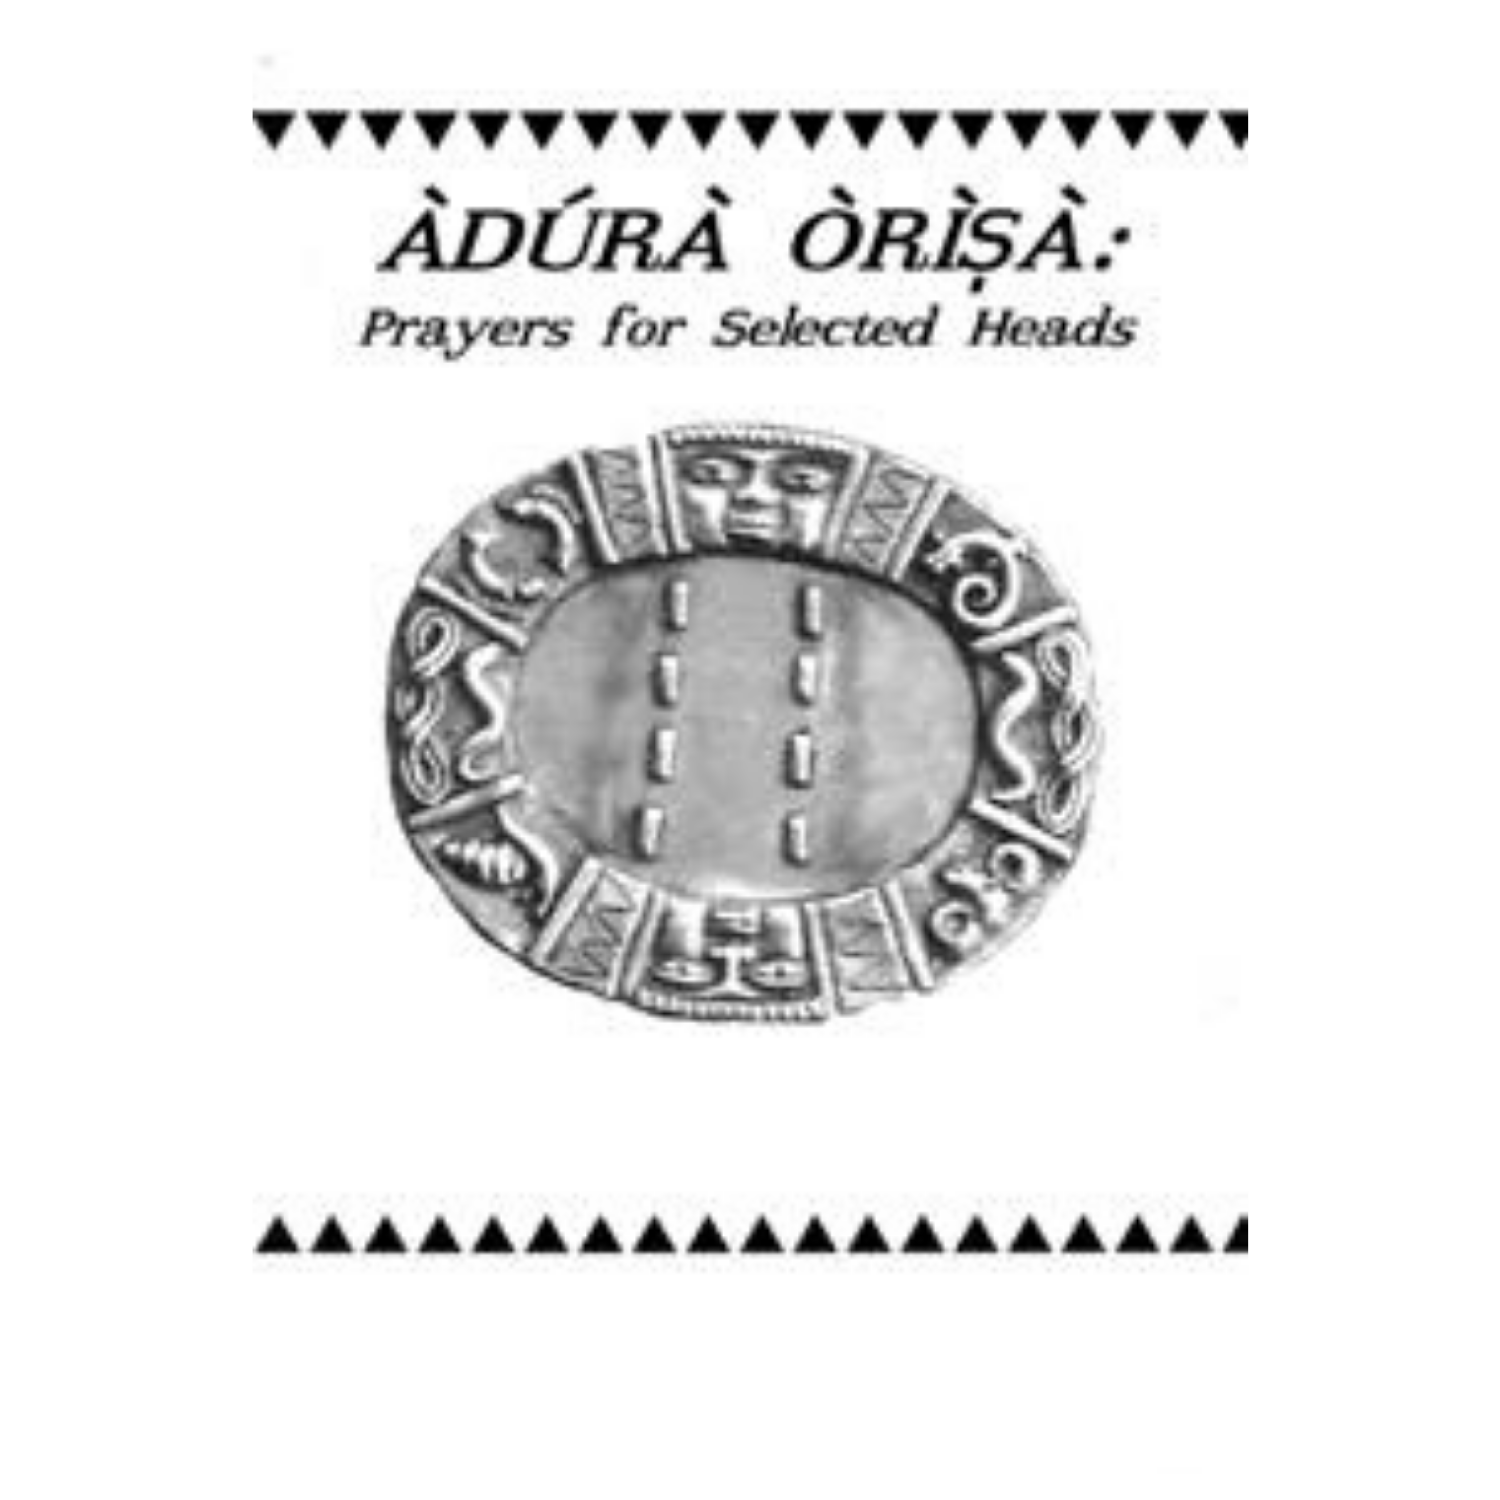 John Mason's Adura Orisa:  Prayers for Selected Heads - Alagema Fabrics & Accessories